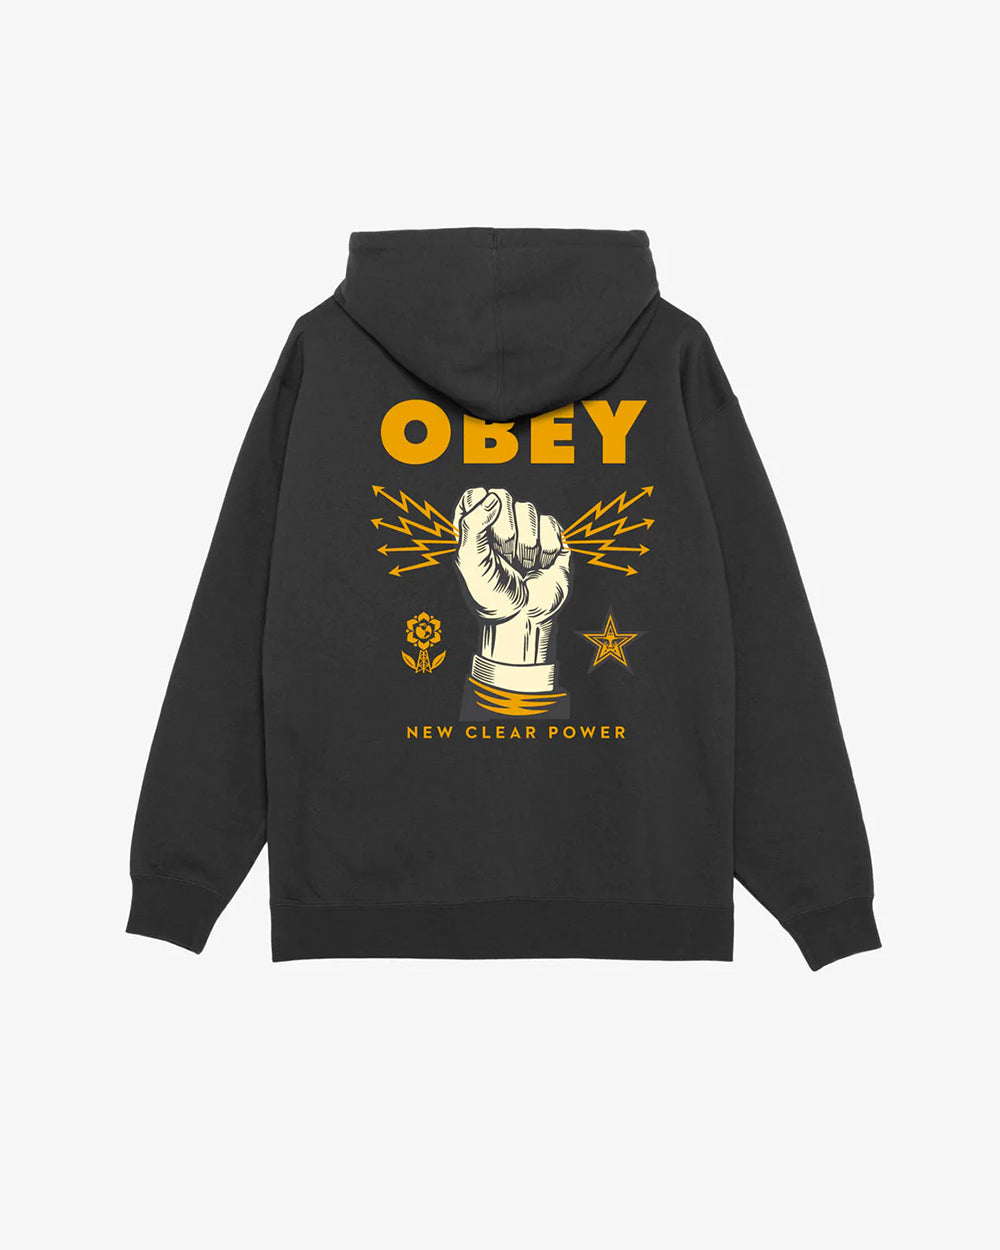 Obey New Clear Power Hooded Sweatshirt